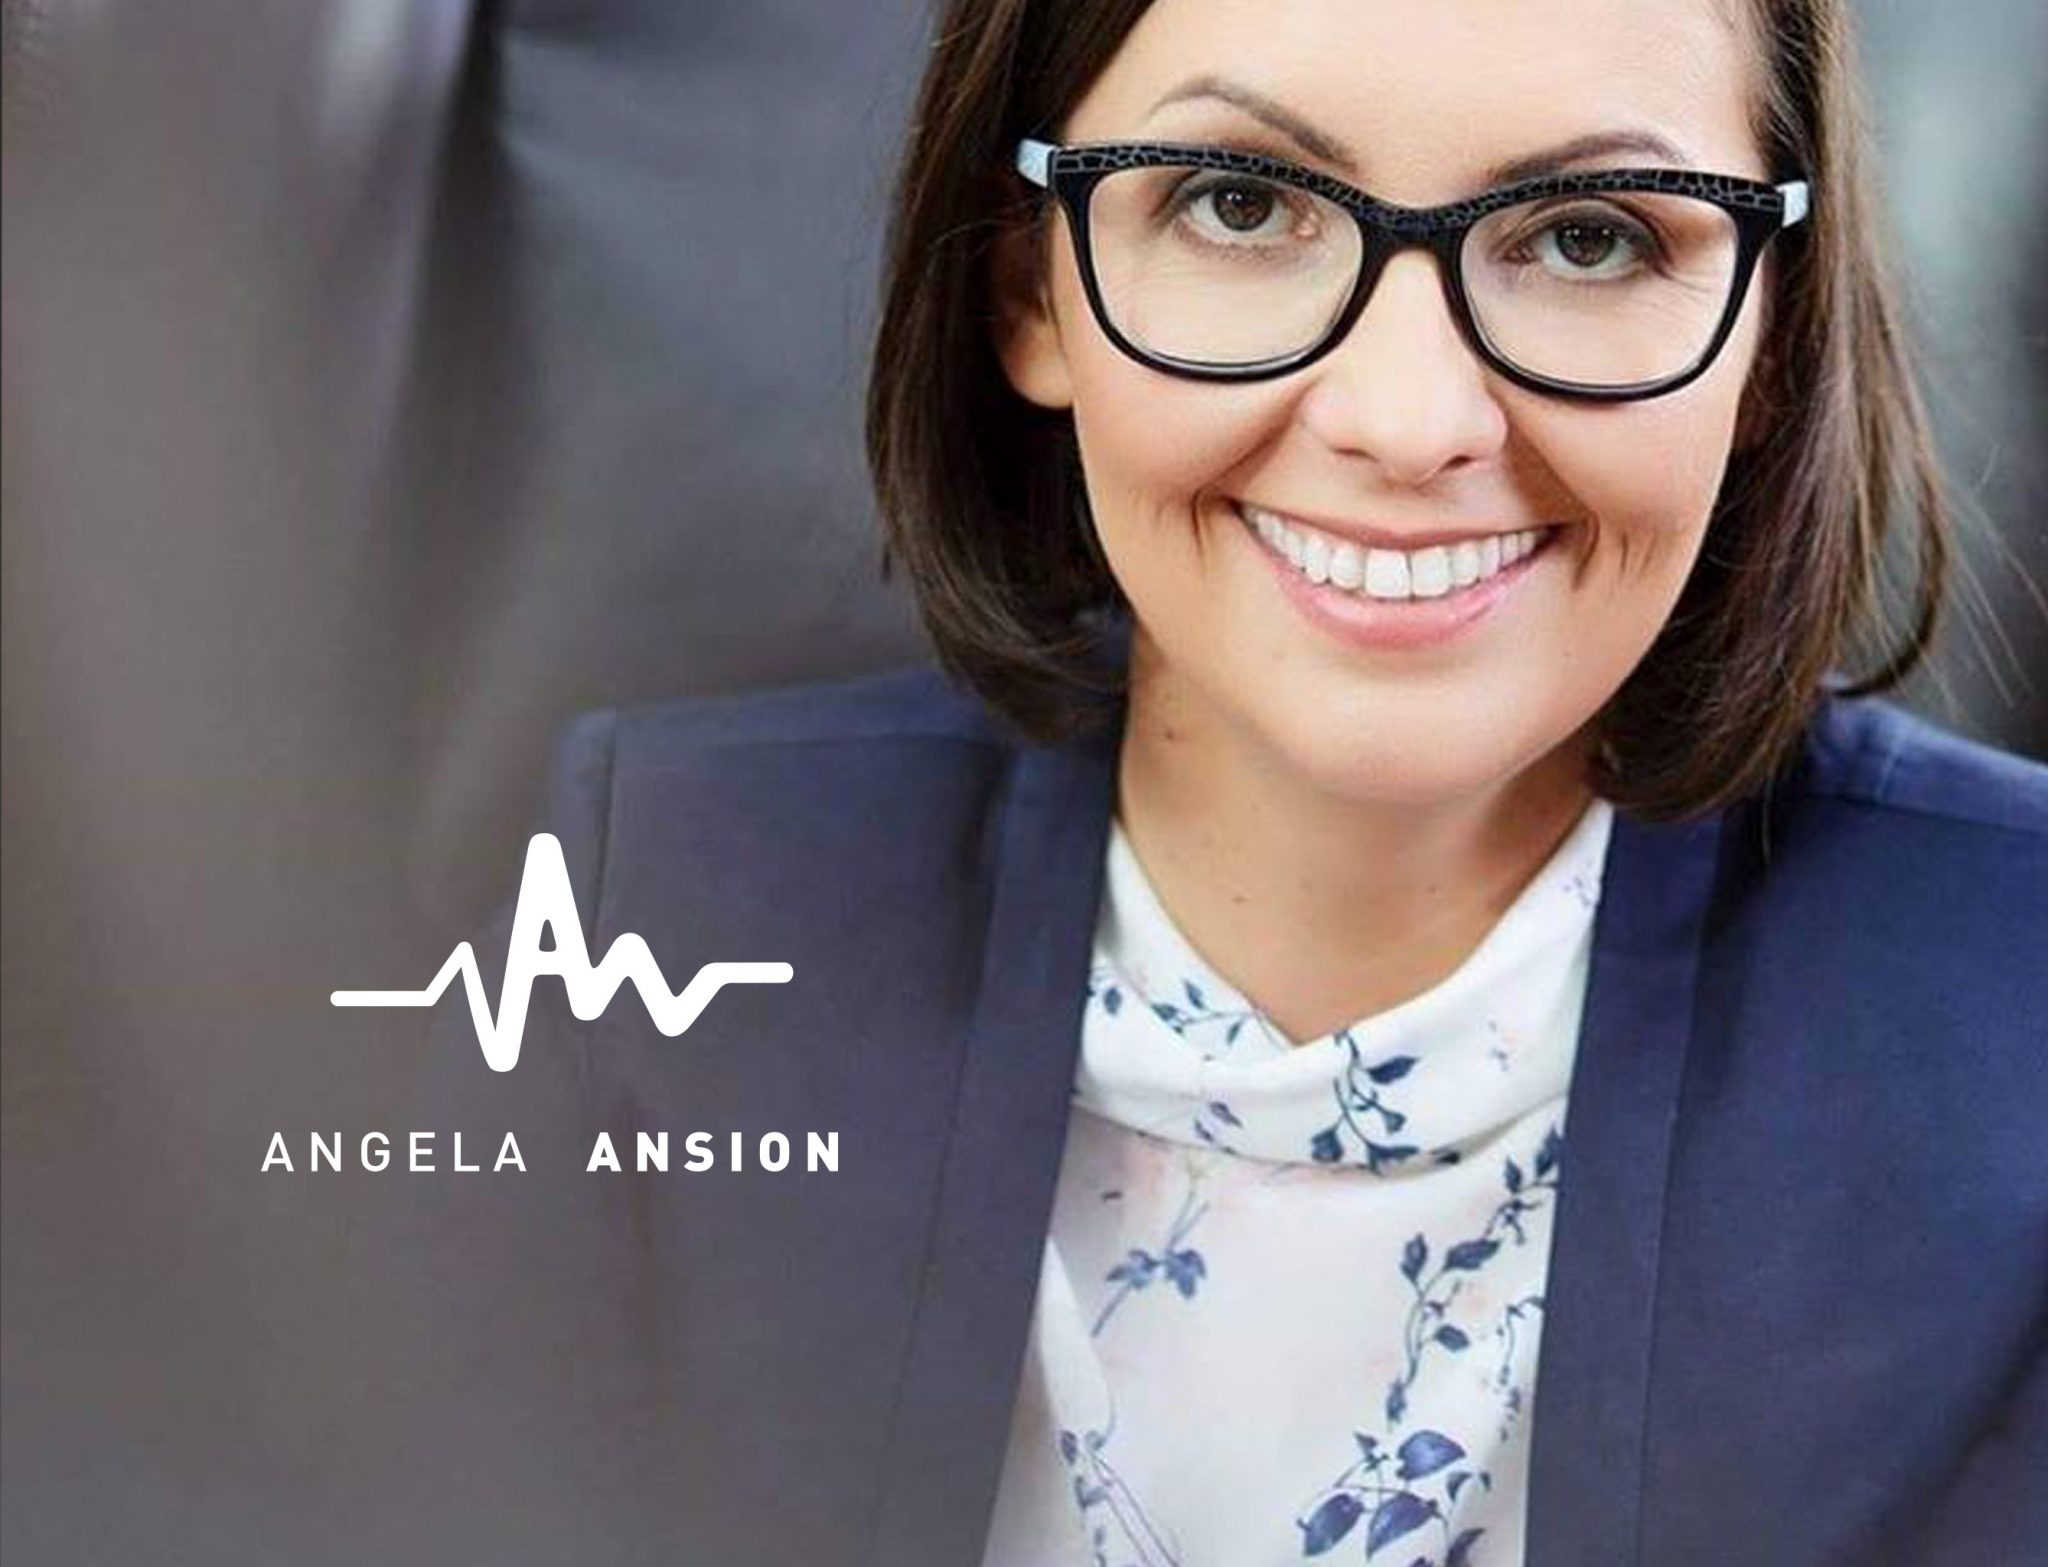 Angela Ansion photo with logo